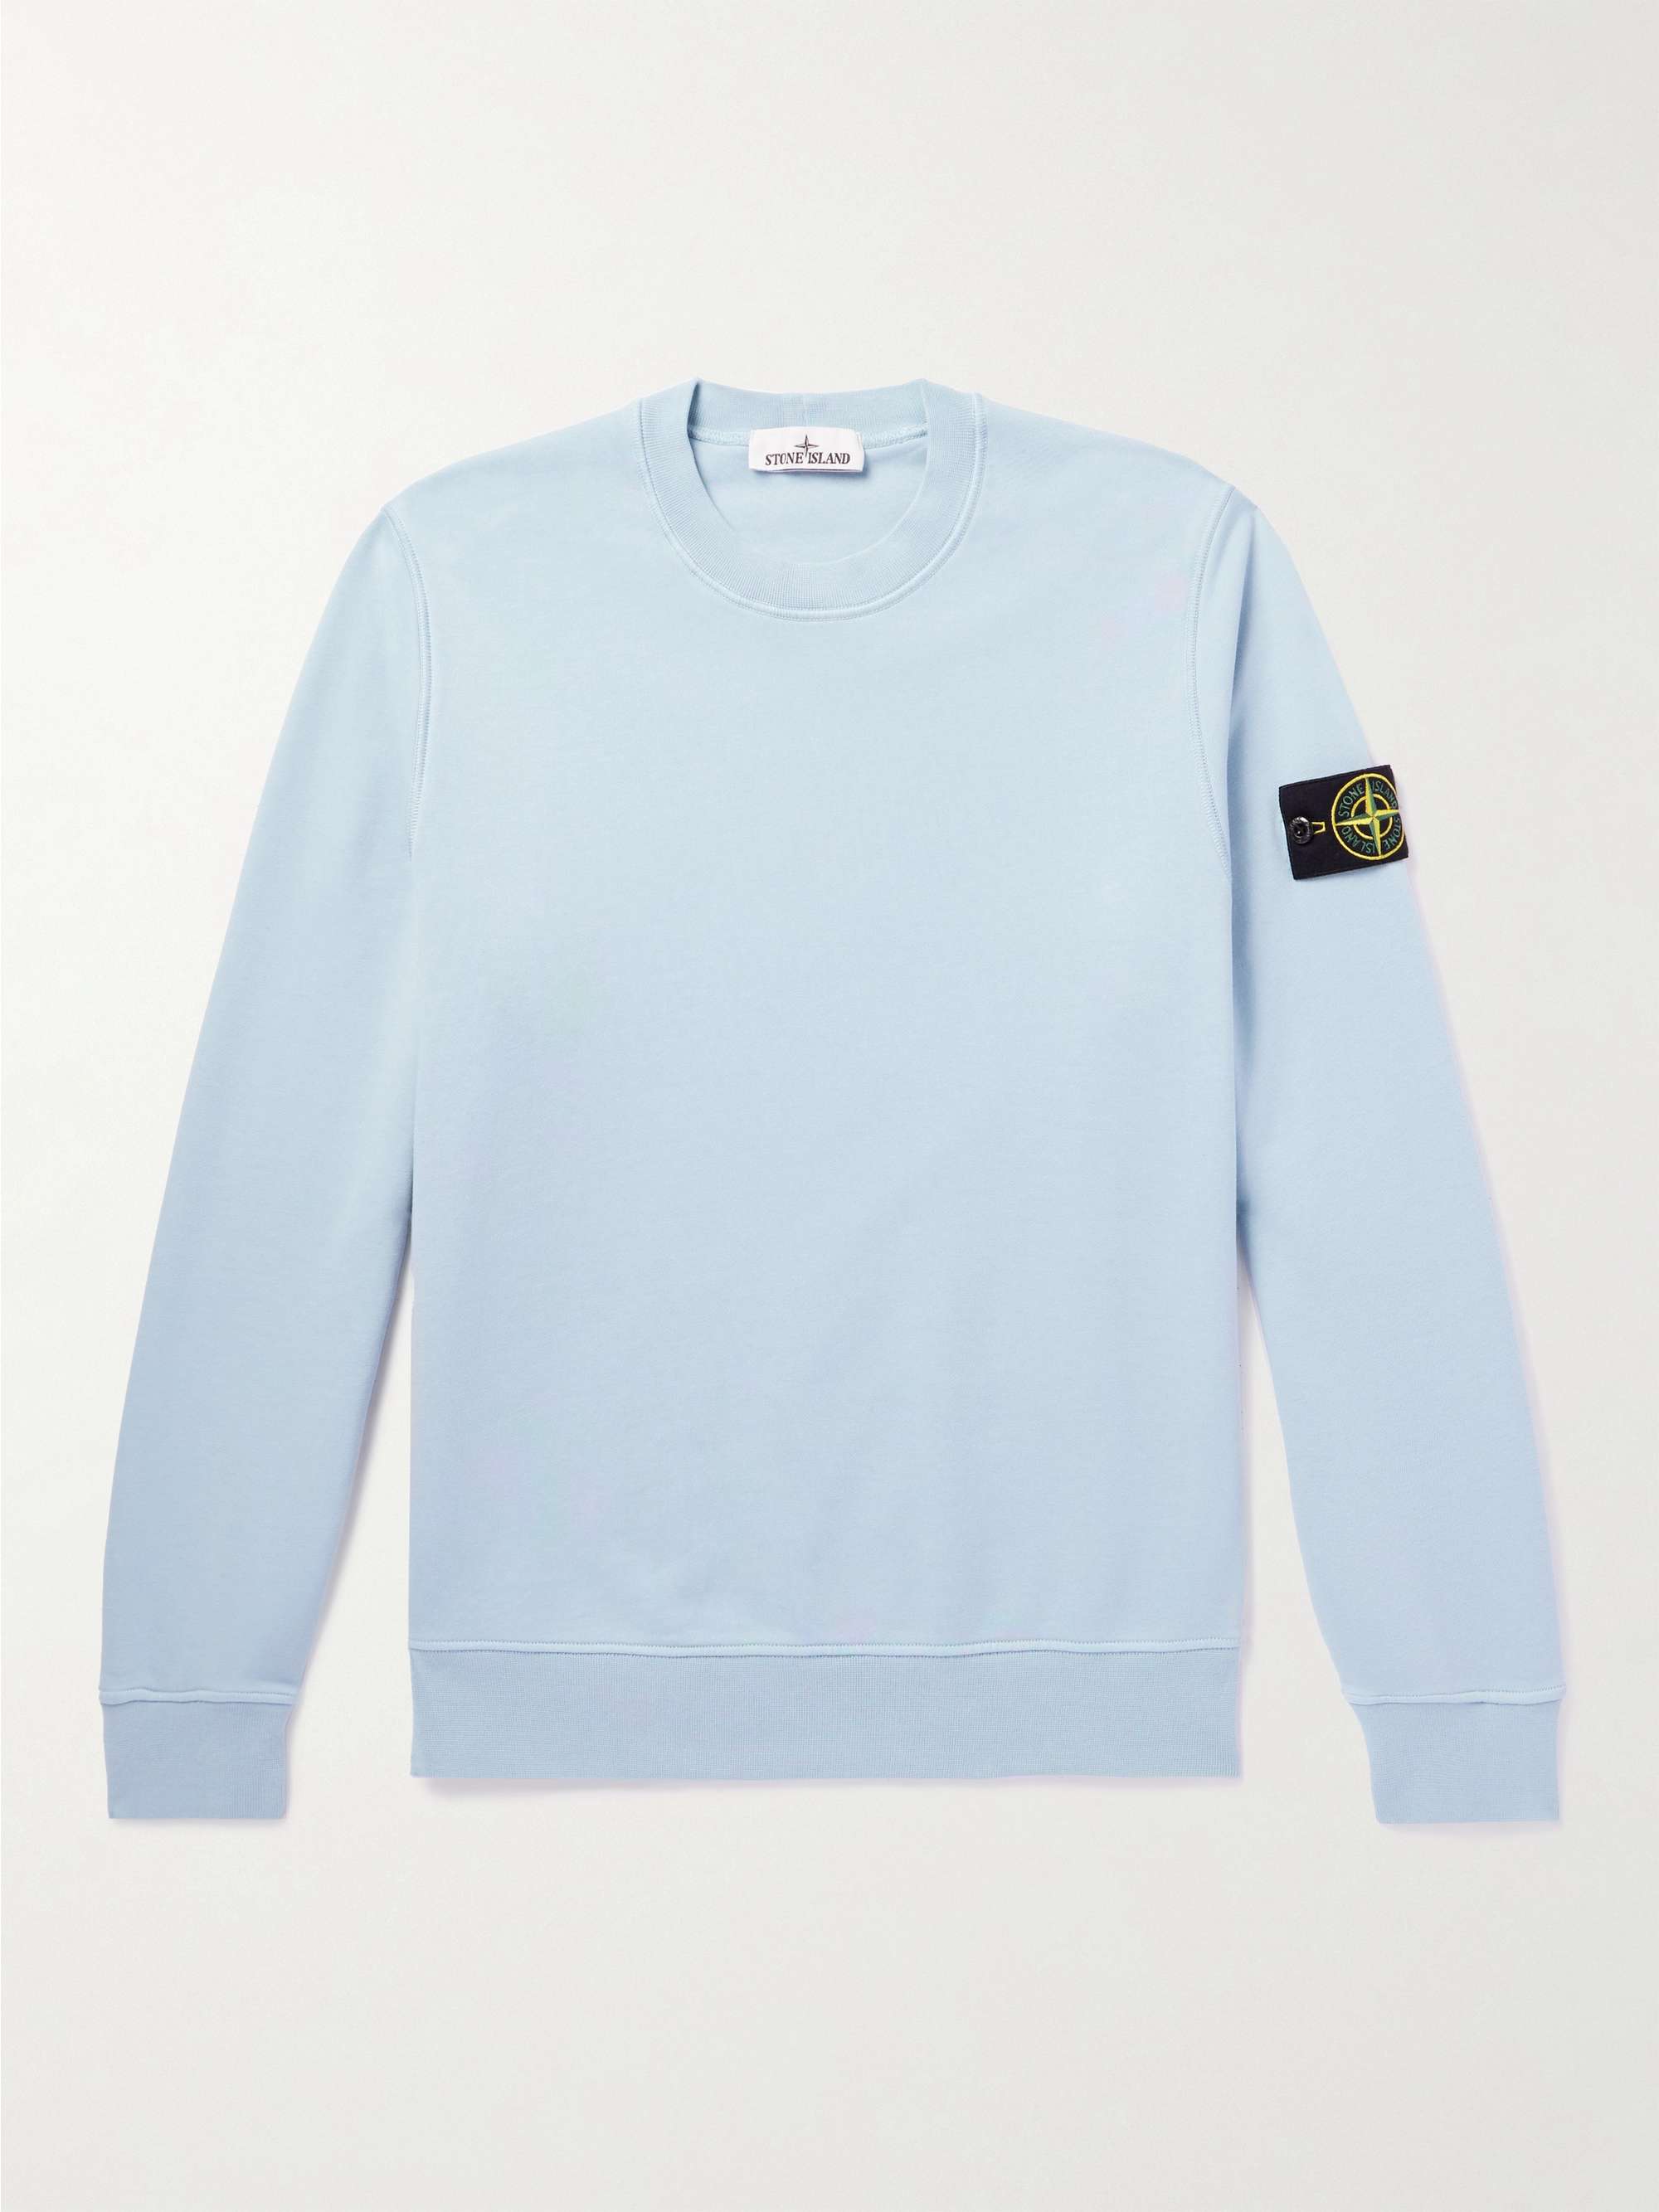 STONE ISLAND Logo-Appliquéd Cotton-Jersey Sweatshirt for Men | MR PORTER